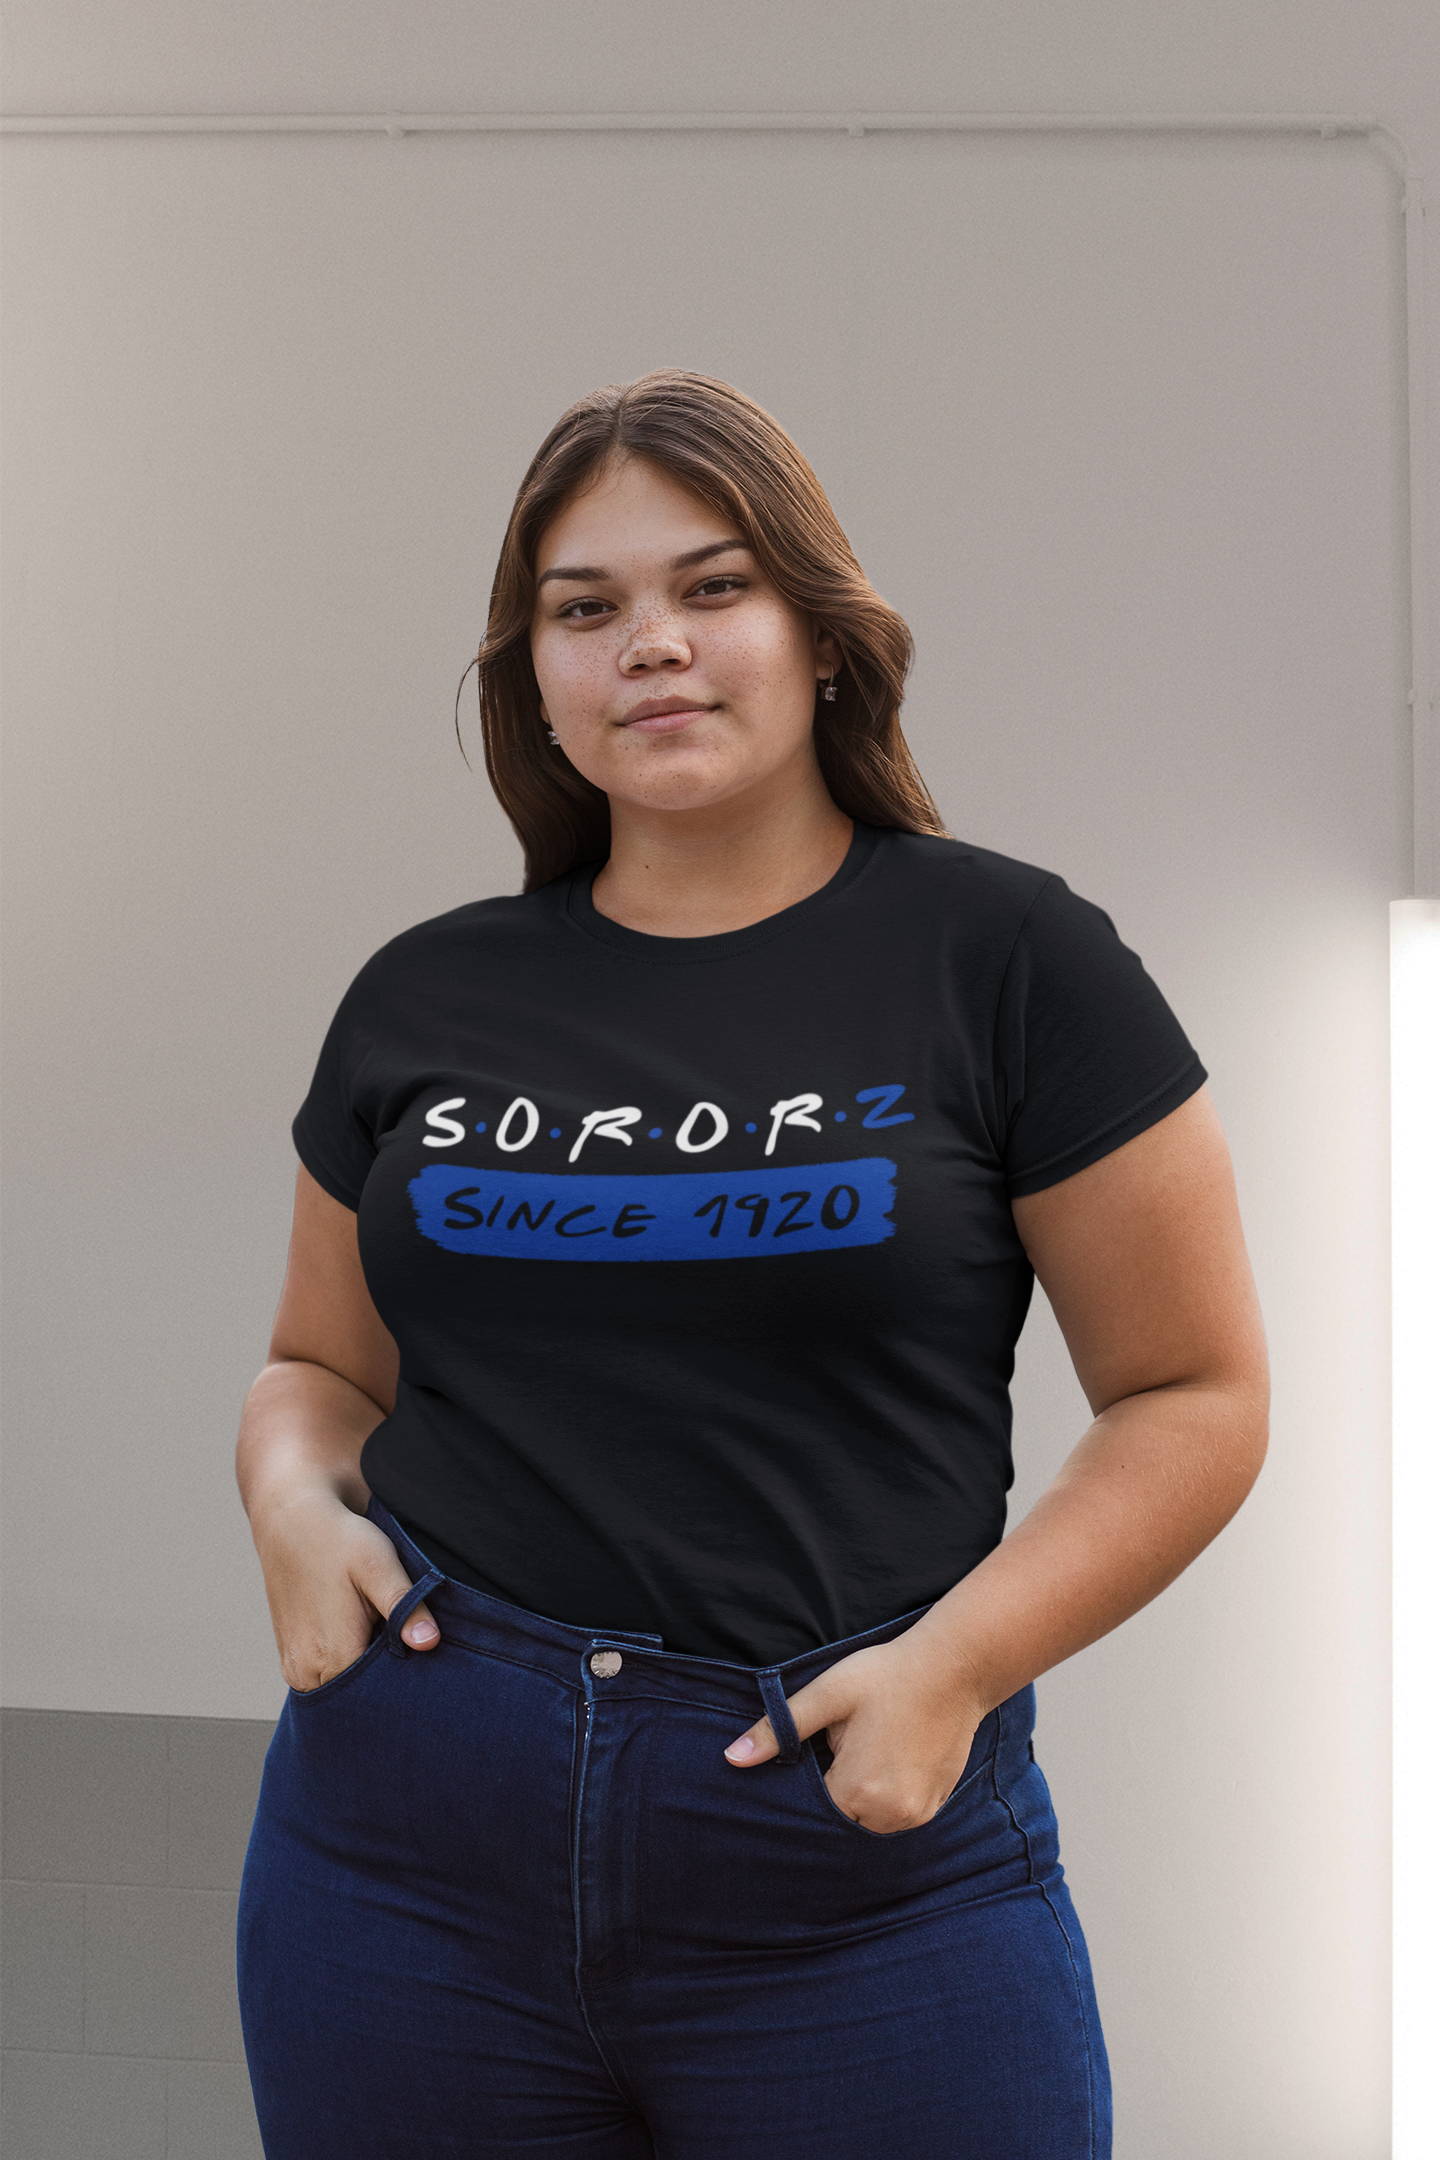 Zeta Phi Beta Sorority SororZ T-Shirt